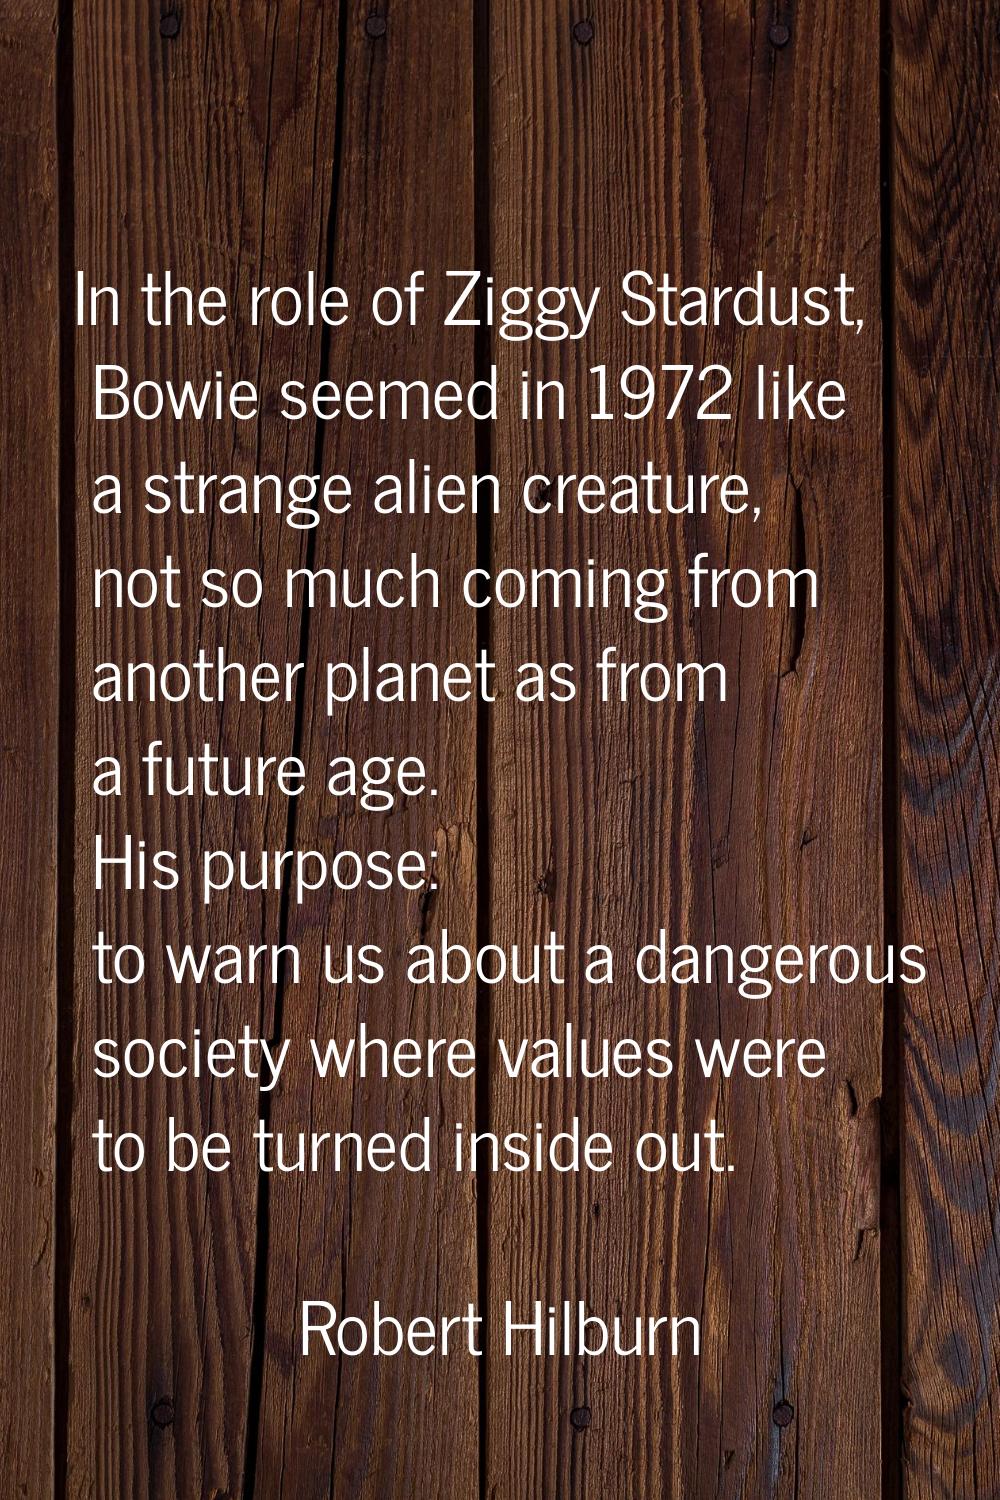 In the role of Ziggy Stardust, Bowie seemed in 1972 like a strange alien creature, not so much comi